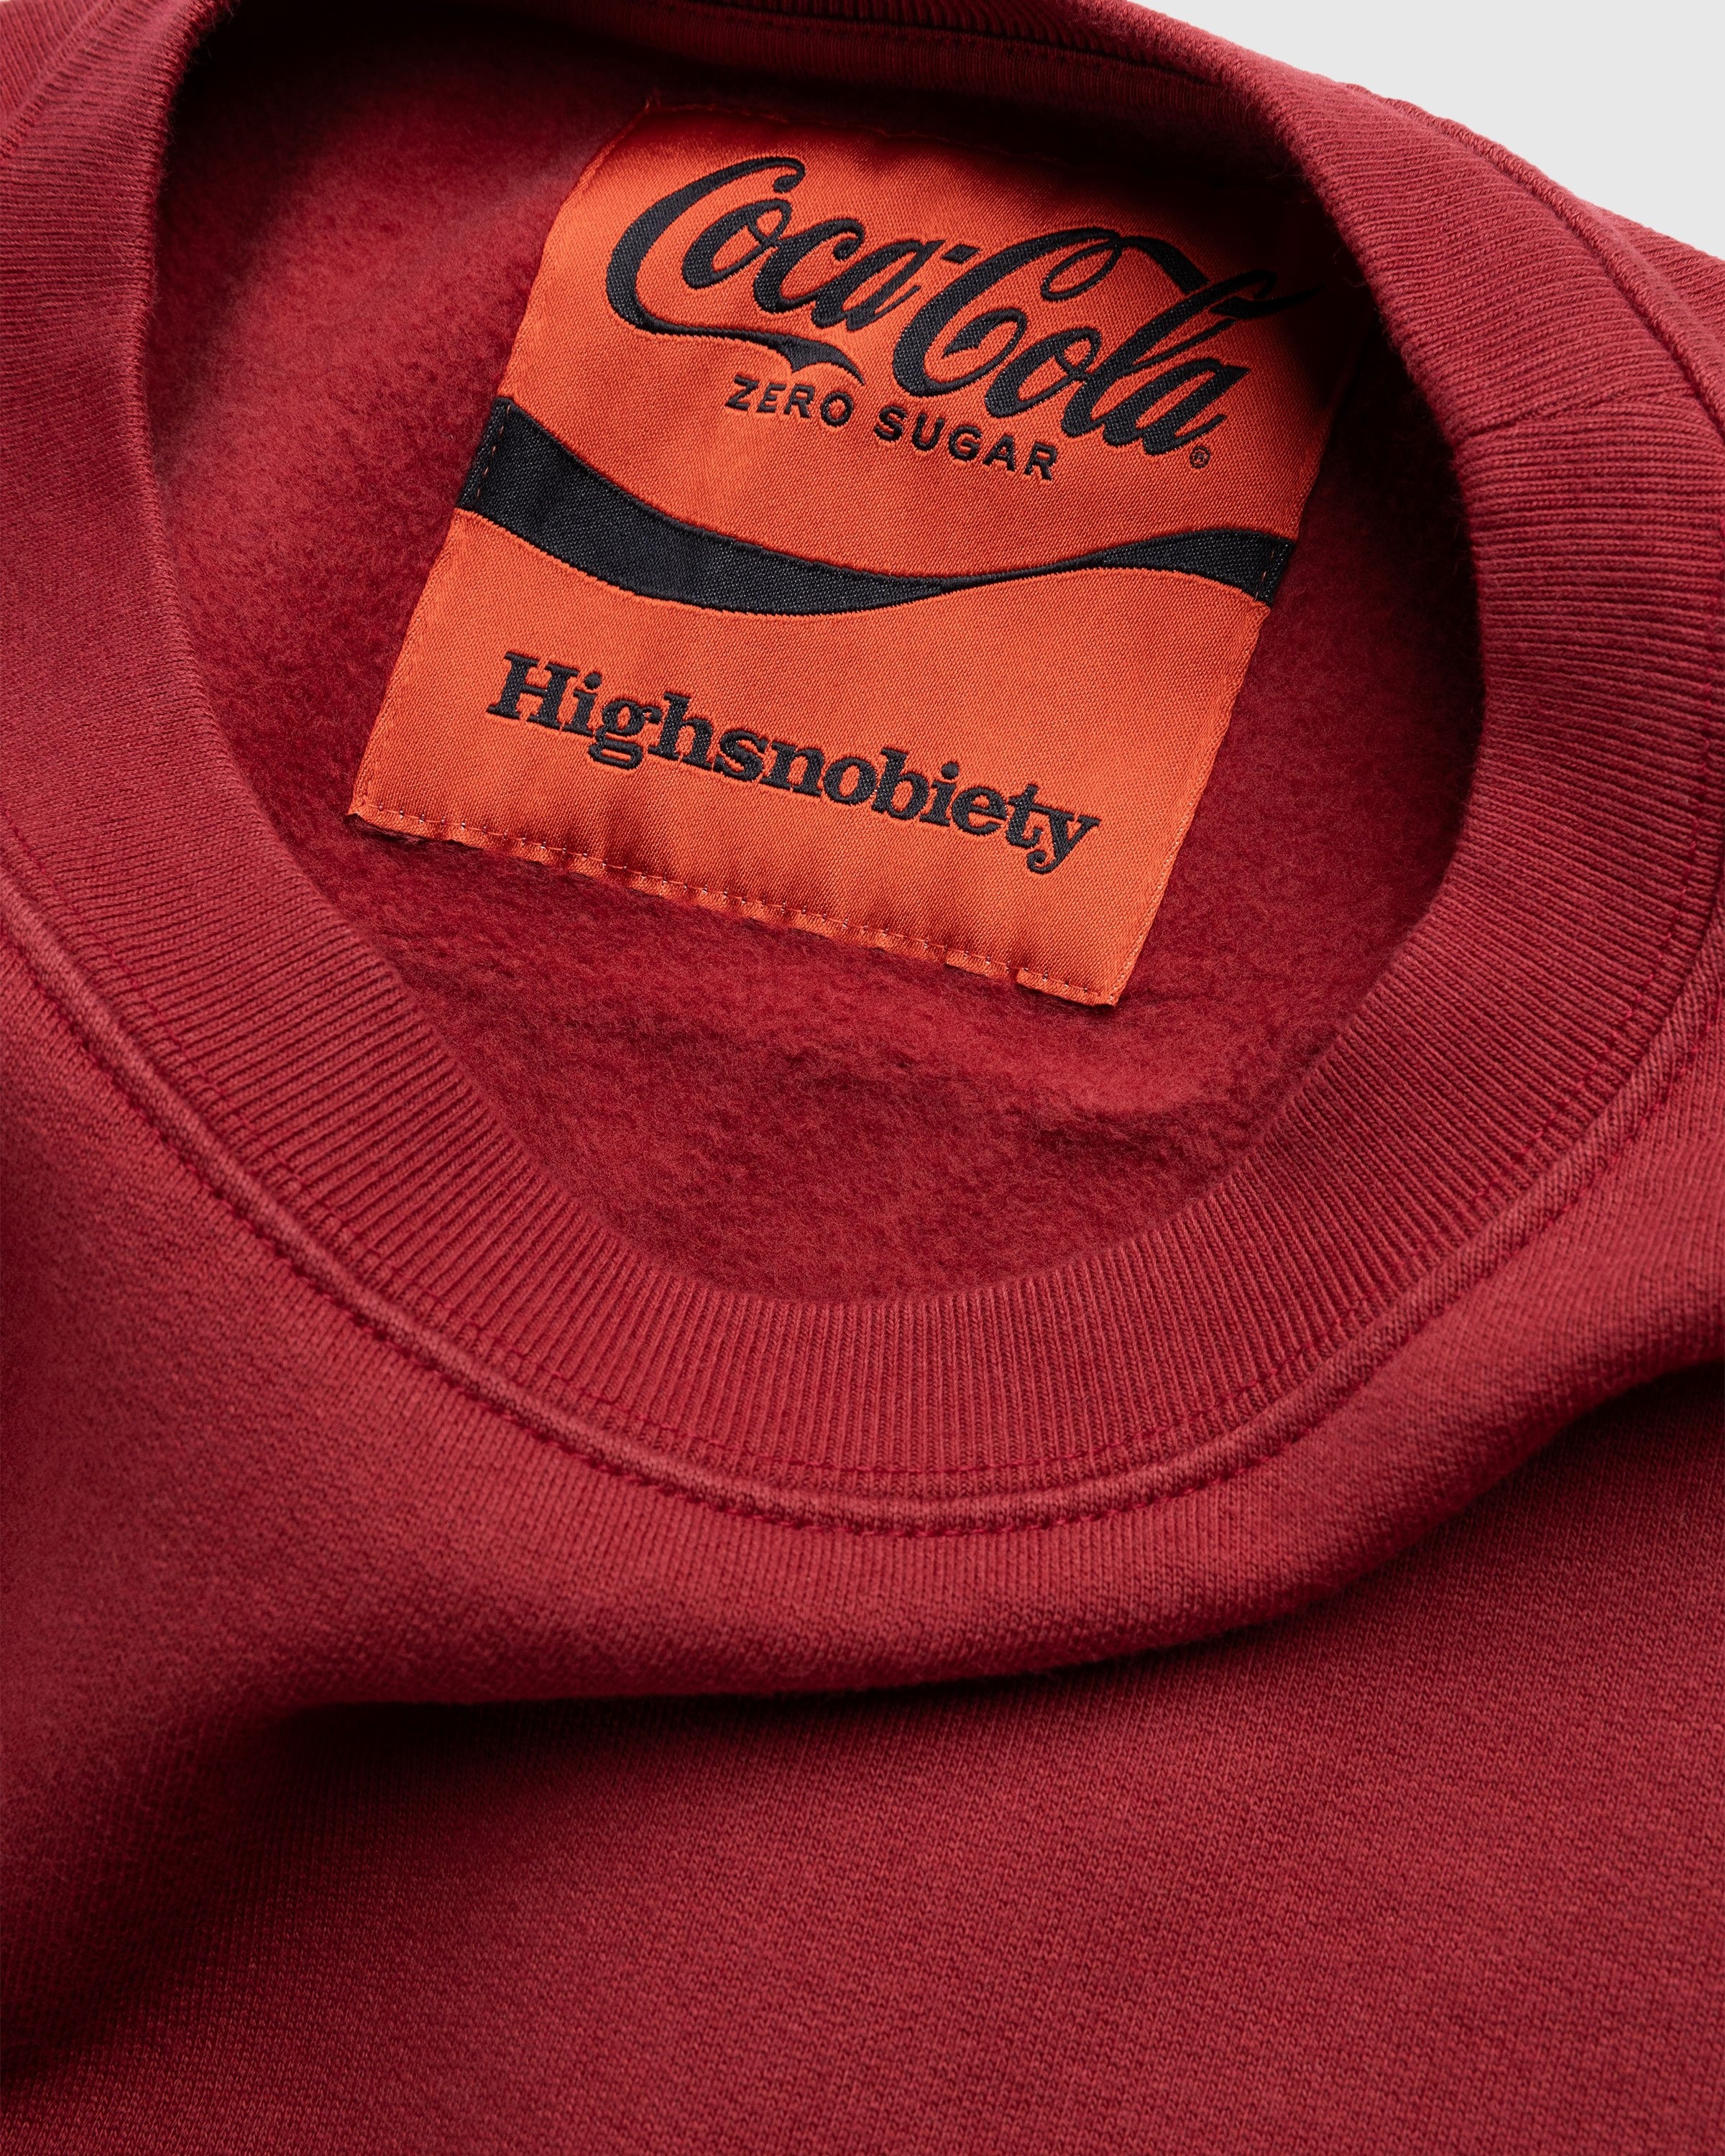 Highsnobiety x Coca-Cola Zero Sugar – Crewneck Burgundy - Knitwear - Red - Image 8